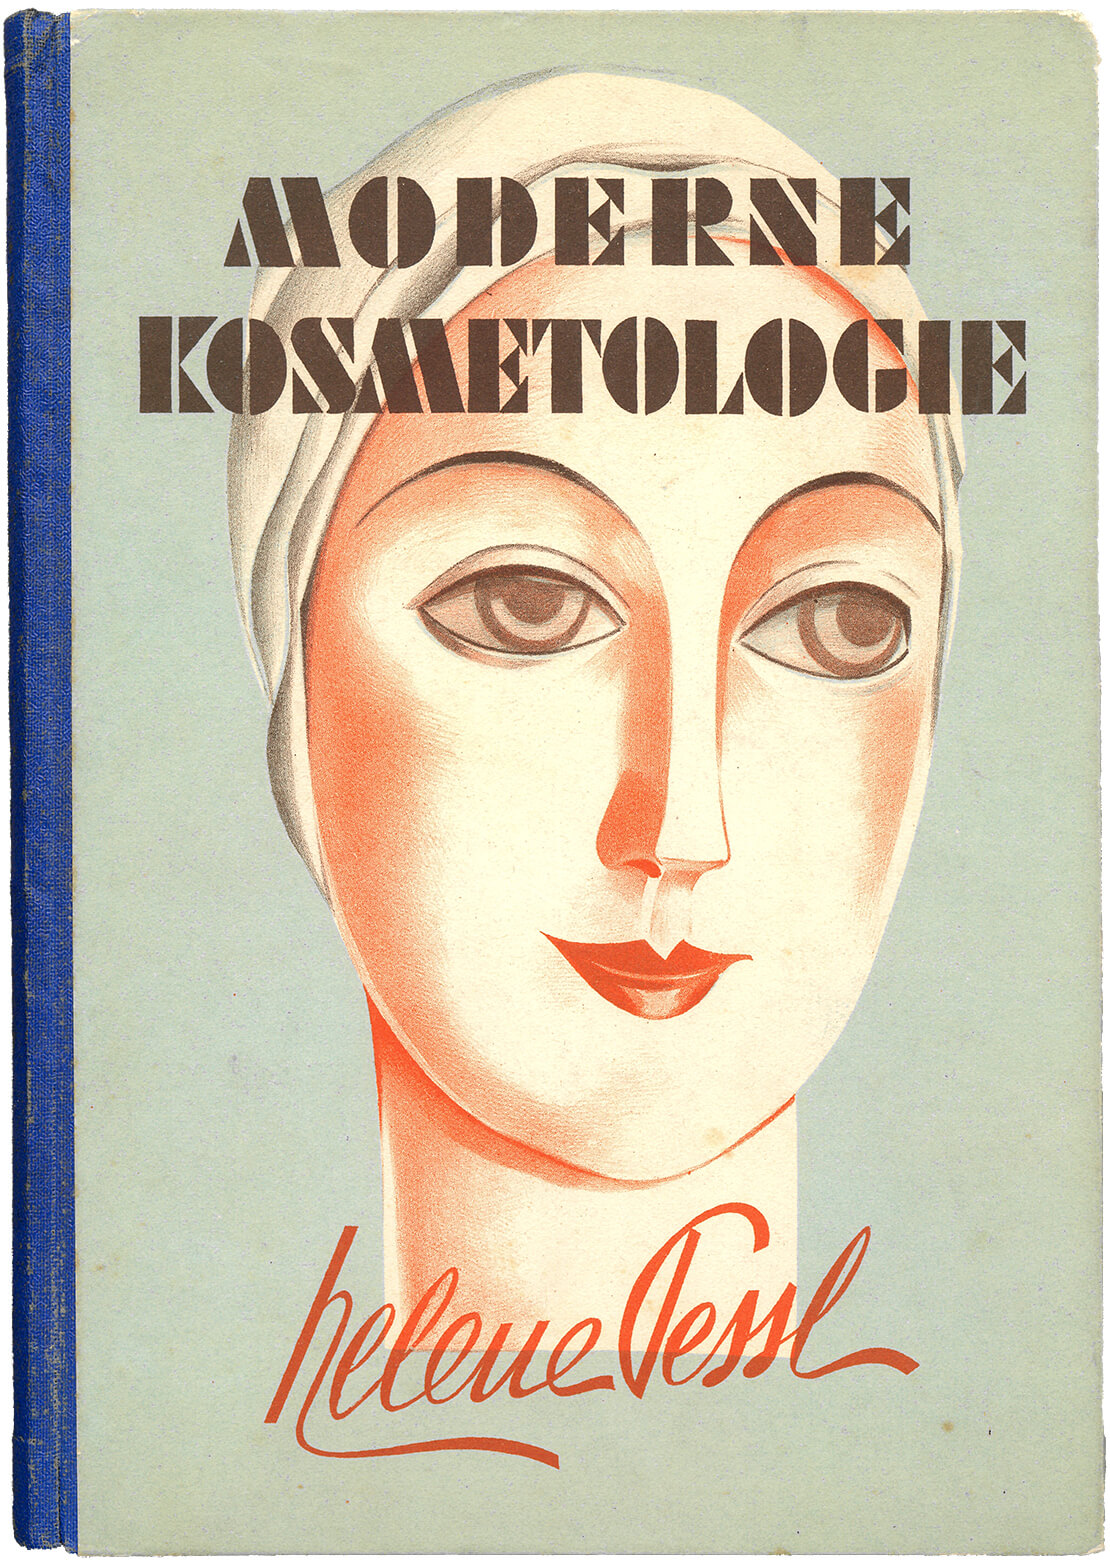 Buch: Helene Pessl: Moderne Kosmetologie, Wien u.a. 1935 (Privatbesitz Susanne Breuss) 